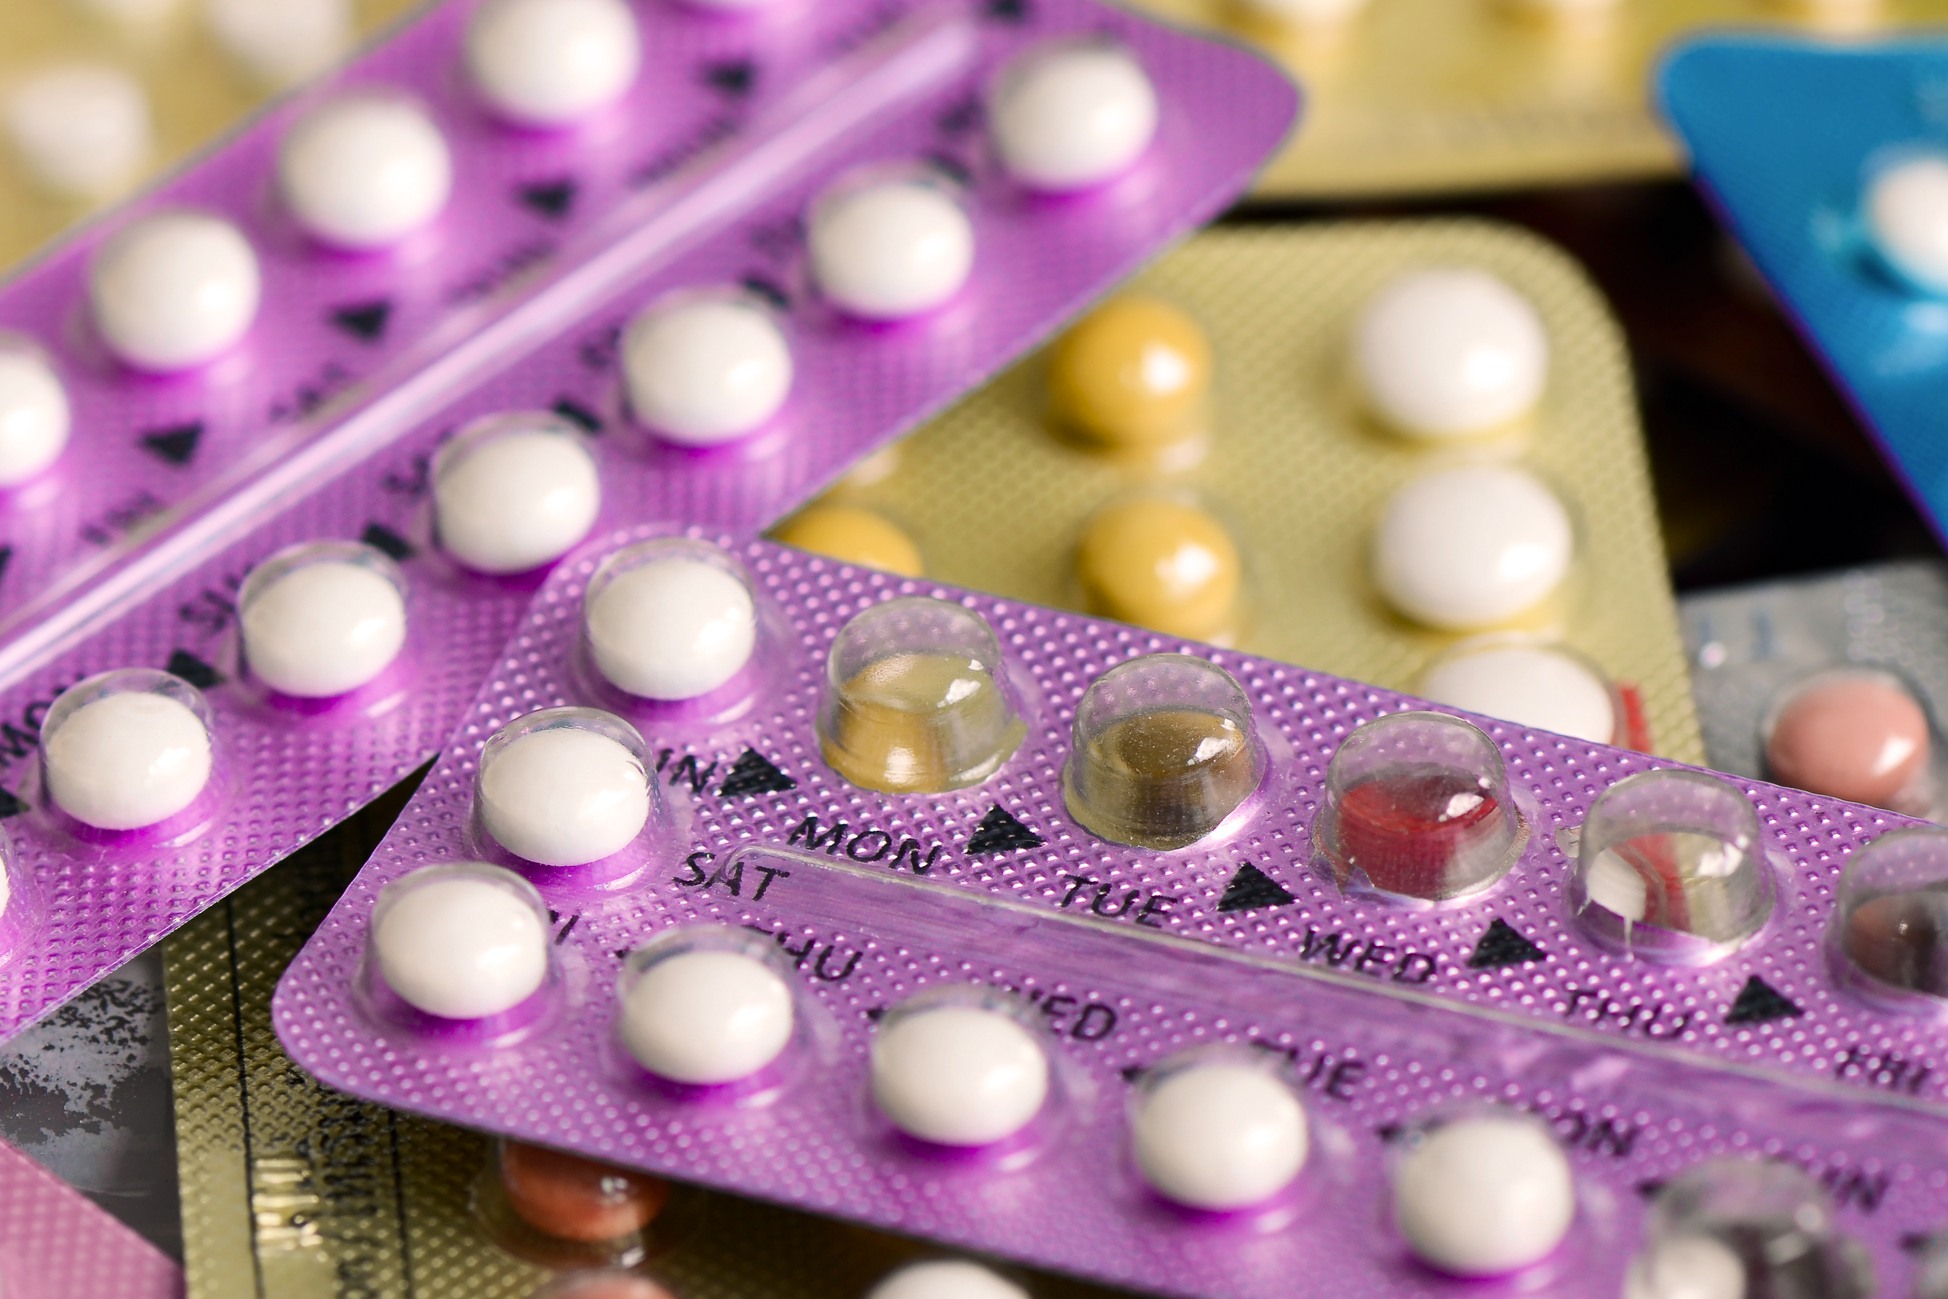 La pilule estro-progestative - Pilule combinée - Doctissimo